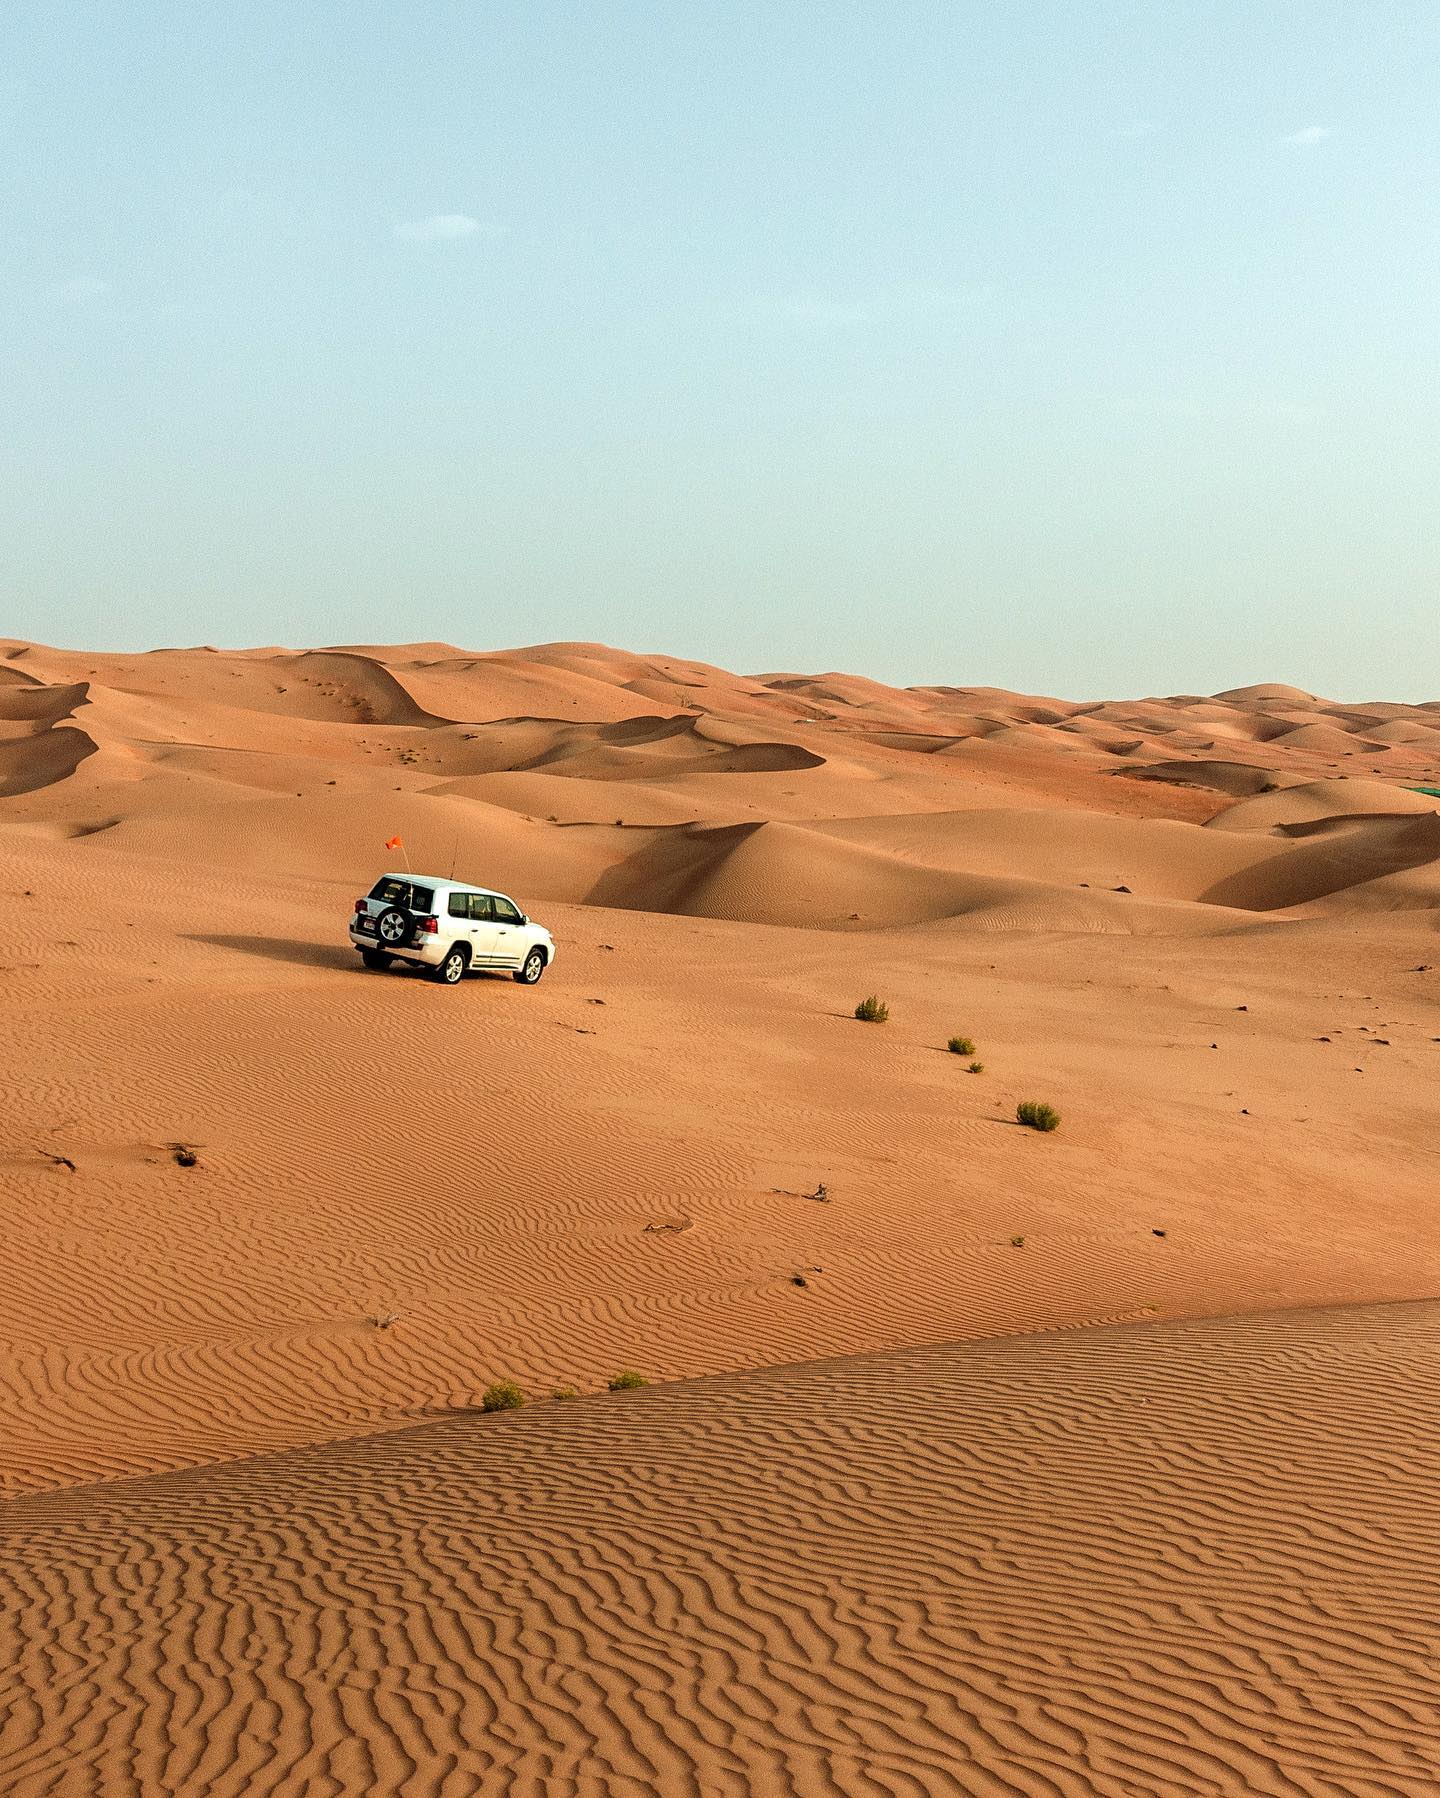 Dune basing in the Qasr Al Sarab desert, United Arab Emirates.